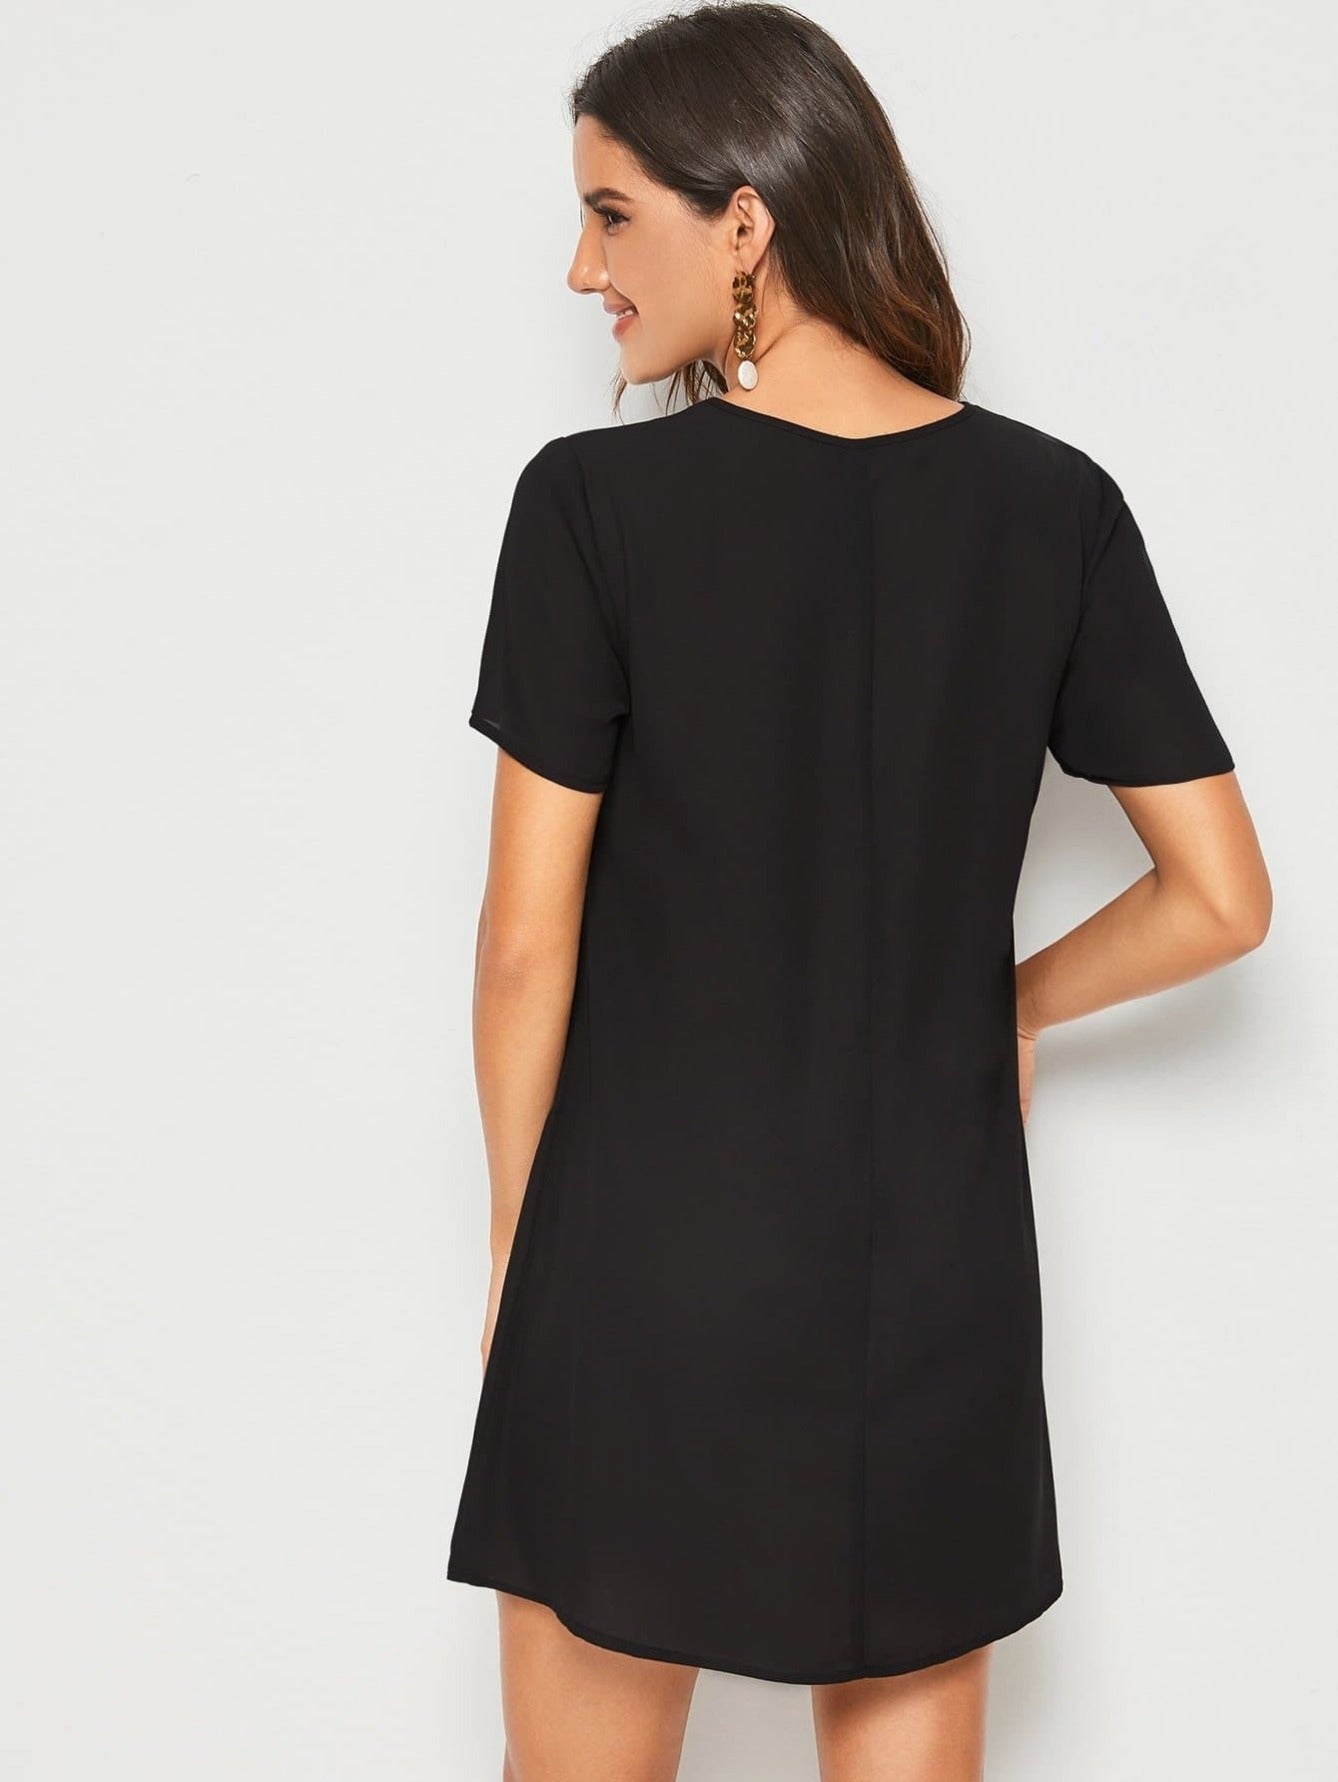 Black V-Neck Mesh Insert Solid Tunic Dress